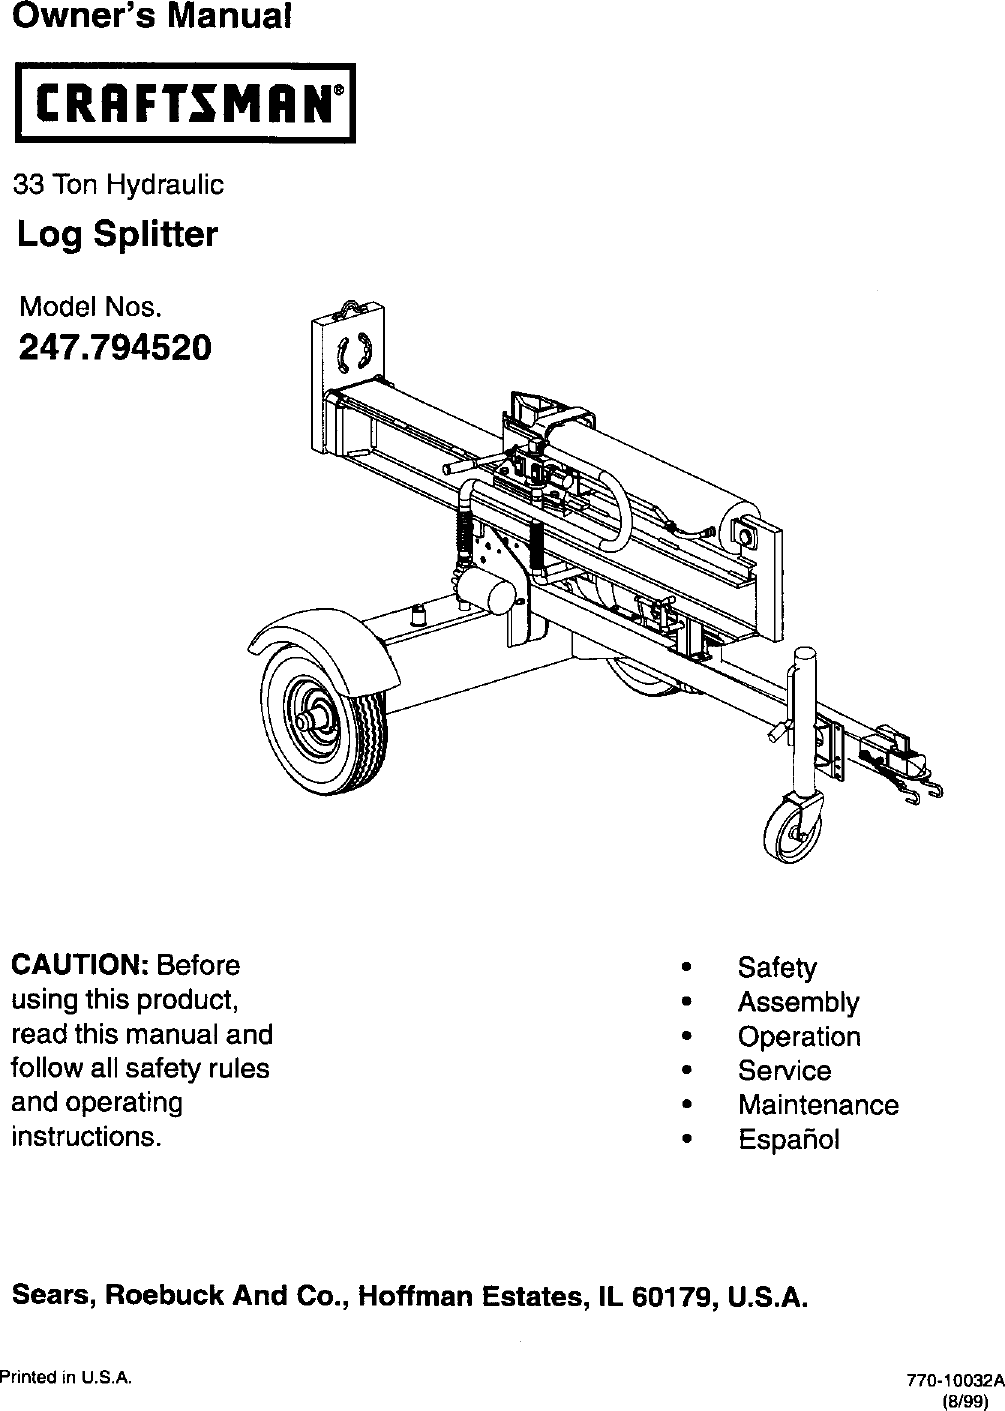 Craftsman Gas Log Splitter Cover 